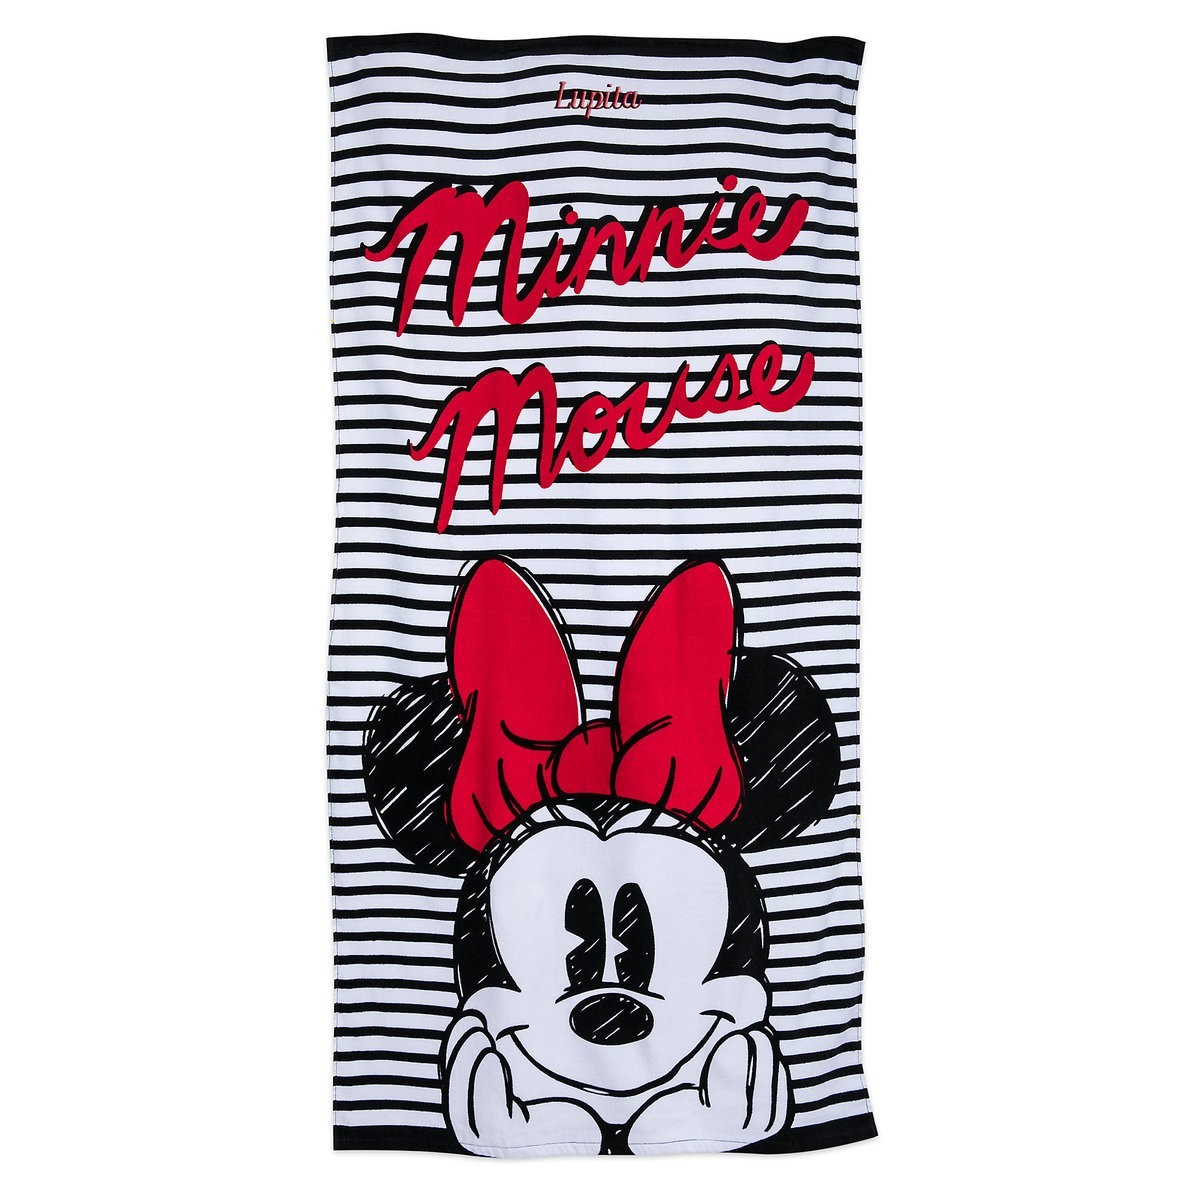 US version Disney store beach towel 2018 Minnie Mouse ( bath towel pool Kids child extra-large )